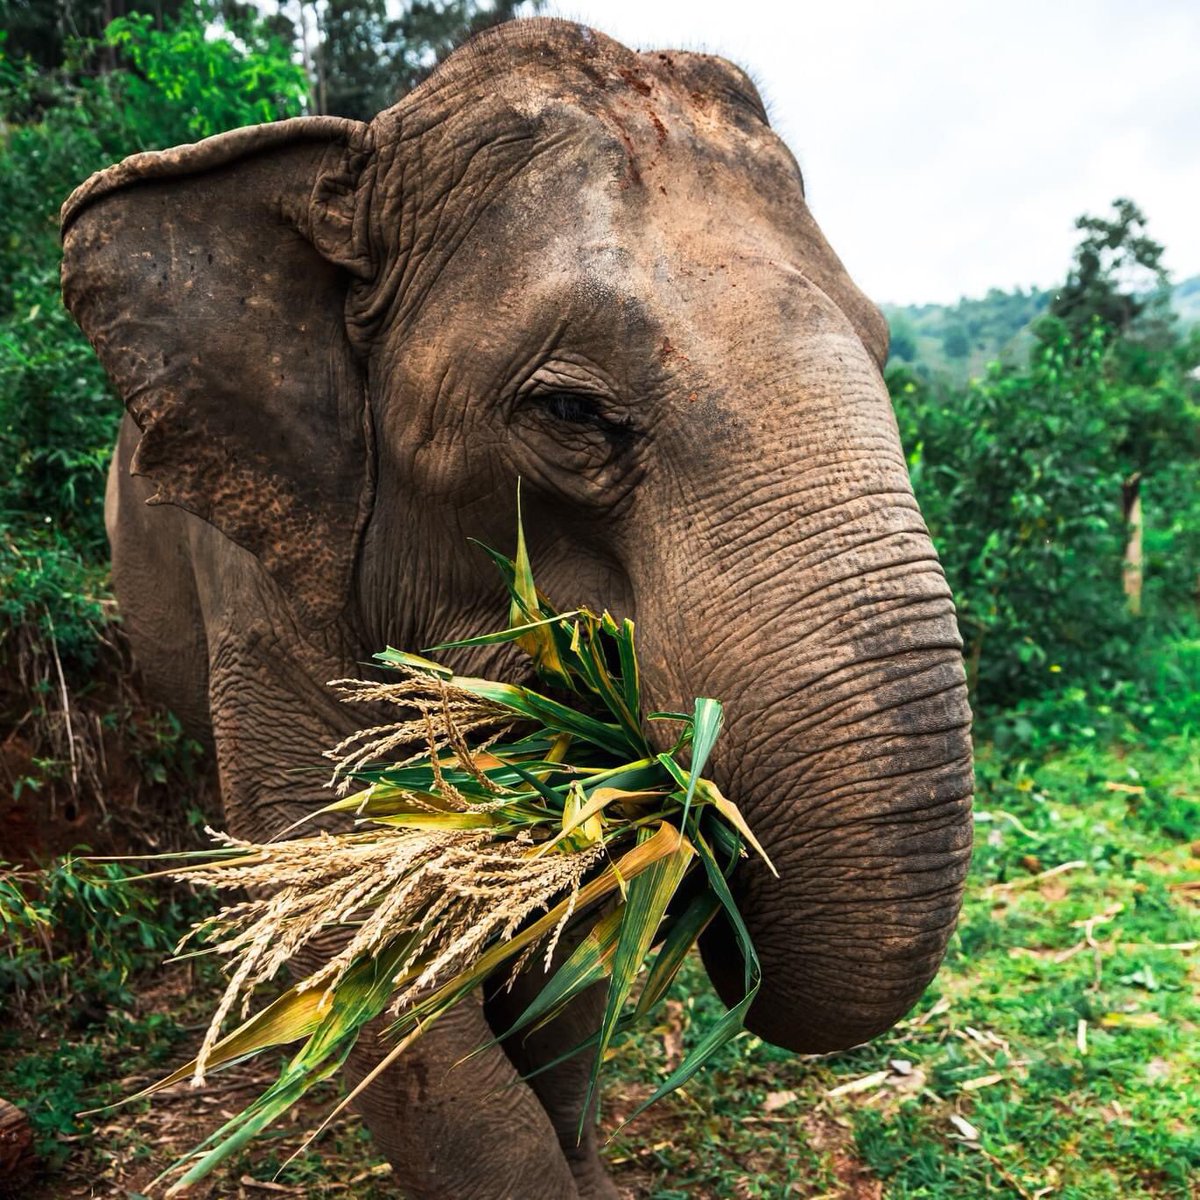 Good Morning from this beautiful elephant eating bamboo in the wild 🎋🐘 😎❤️ [Credit: Antonio Hugo] #StaySafe #WednesdayMotivation #WednesdayMorning